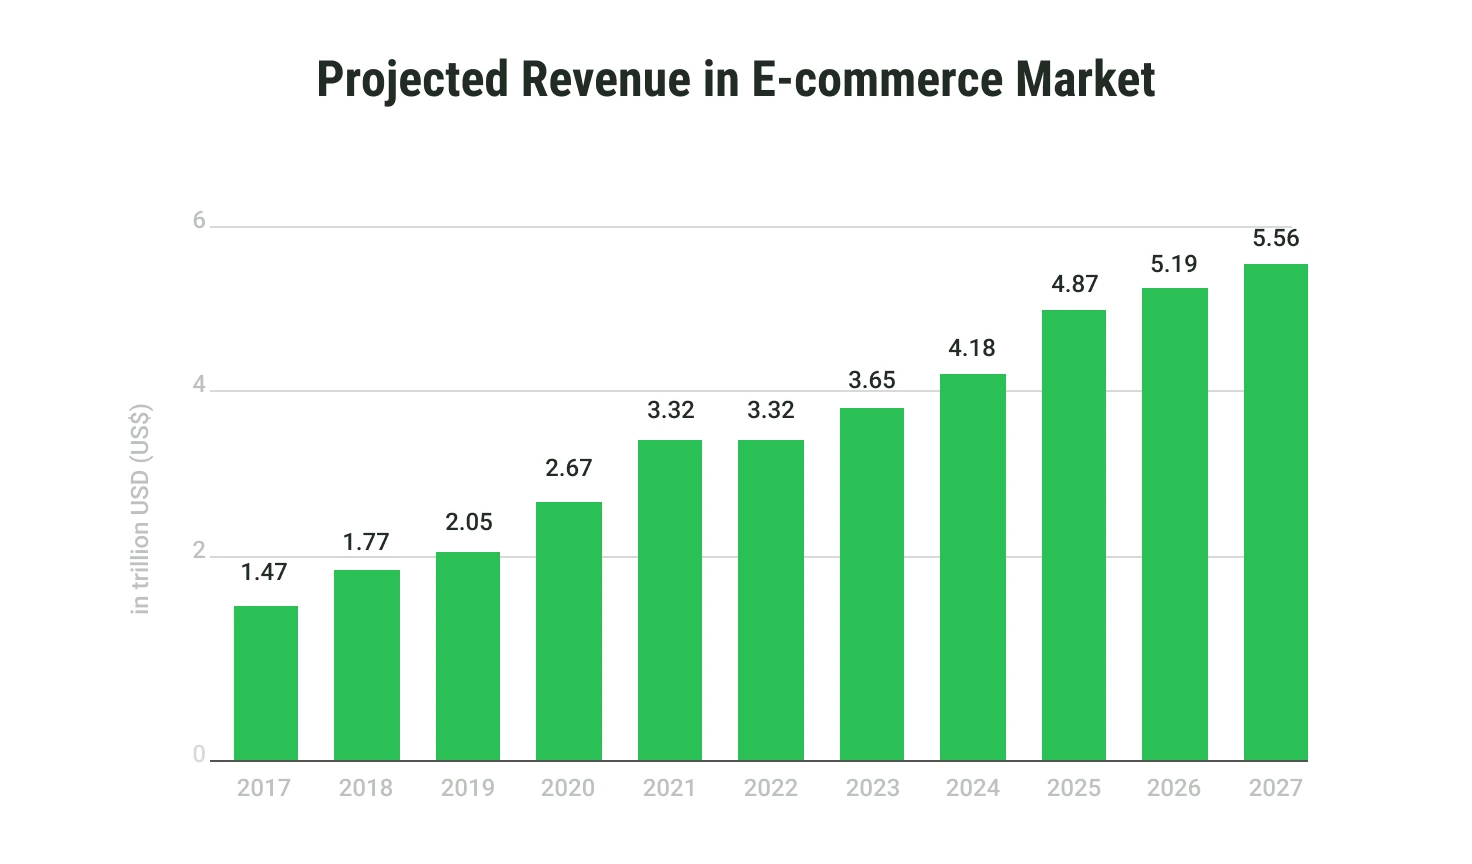 Projected revenue in E-commerce market